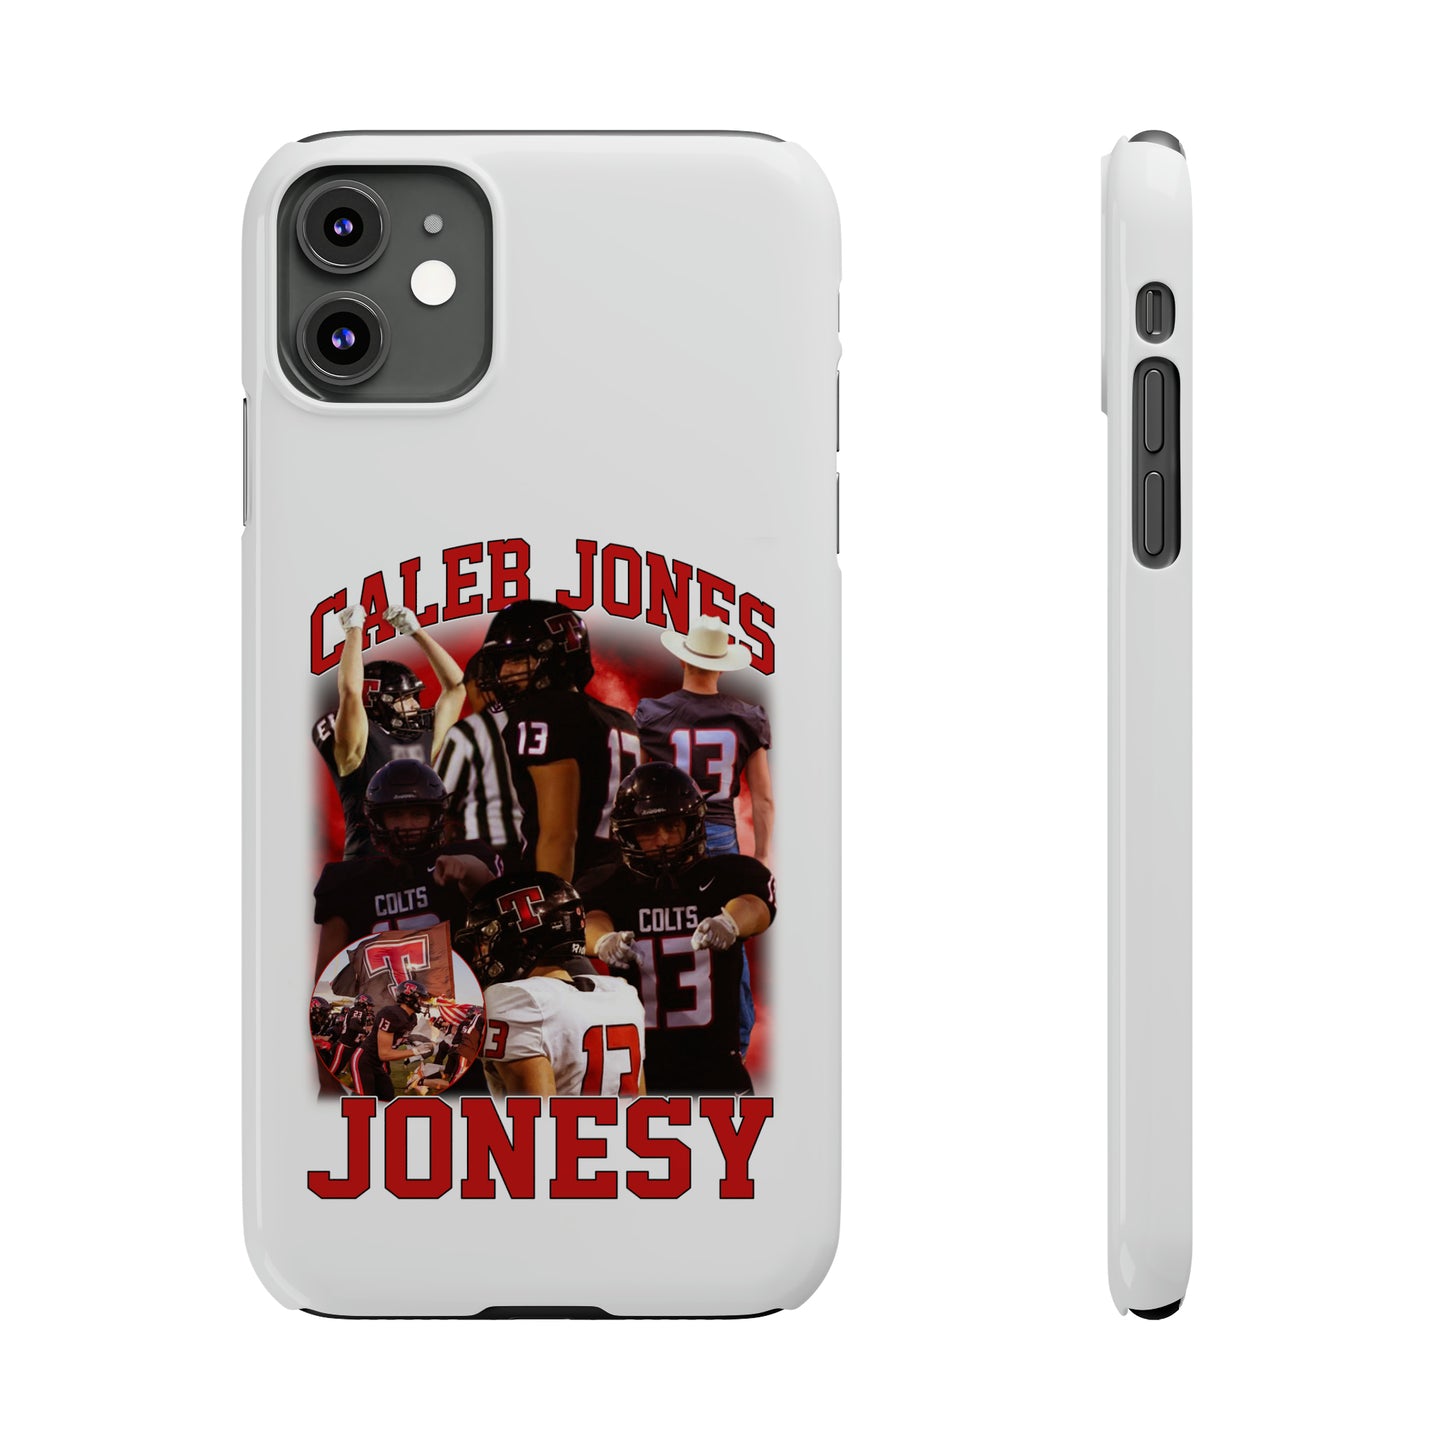 Caleb Jones Slim Phone Cases